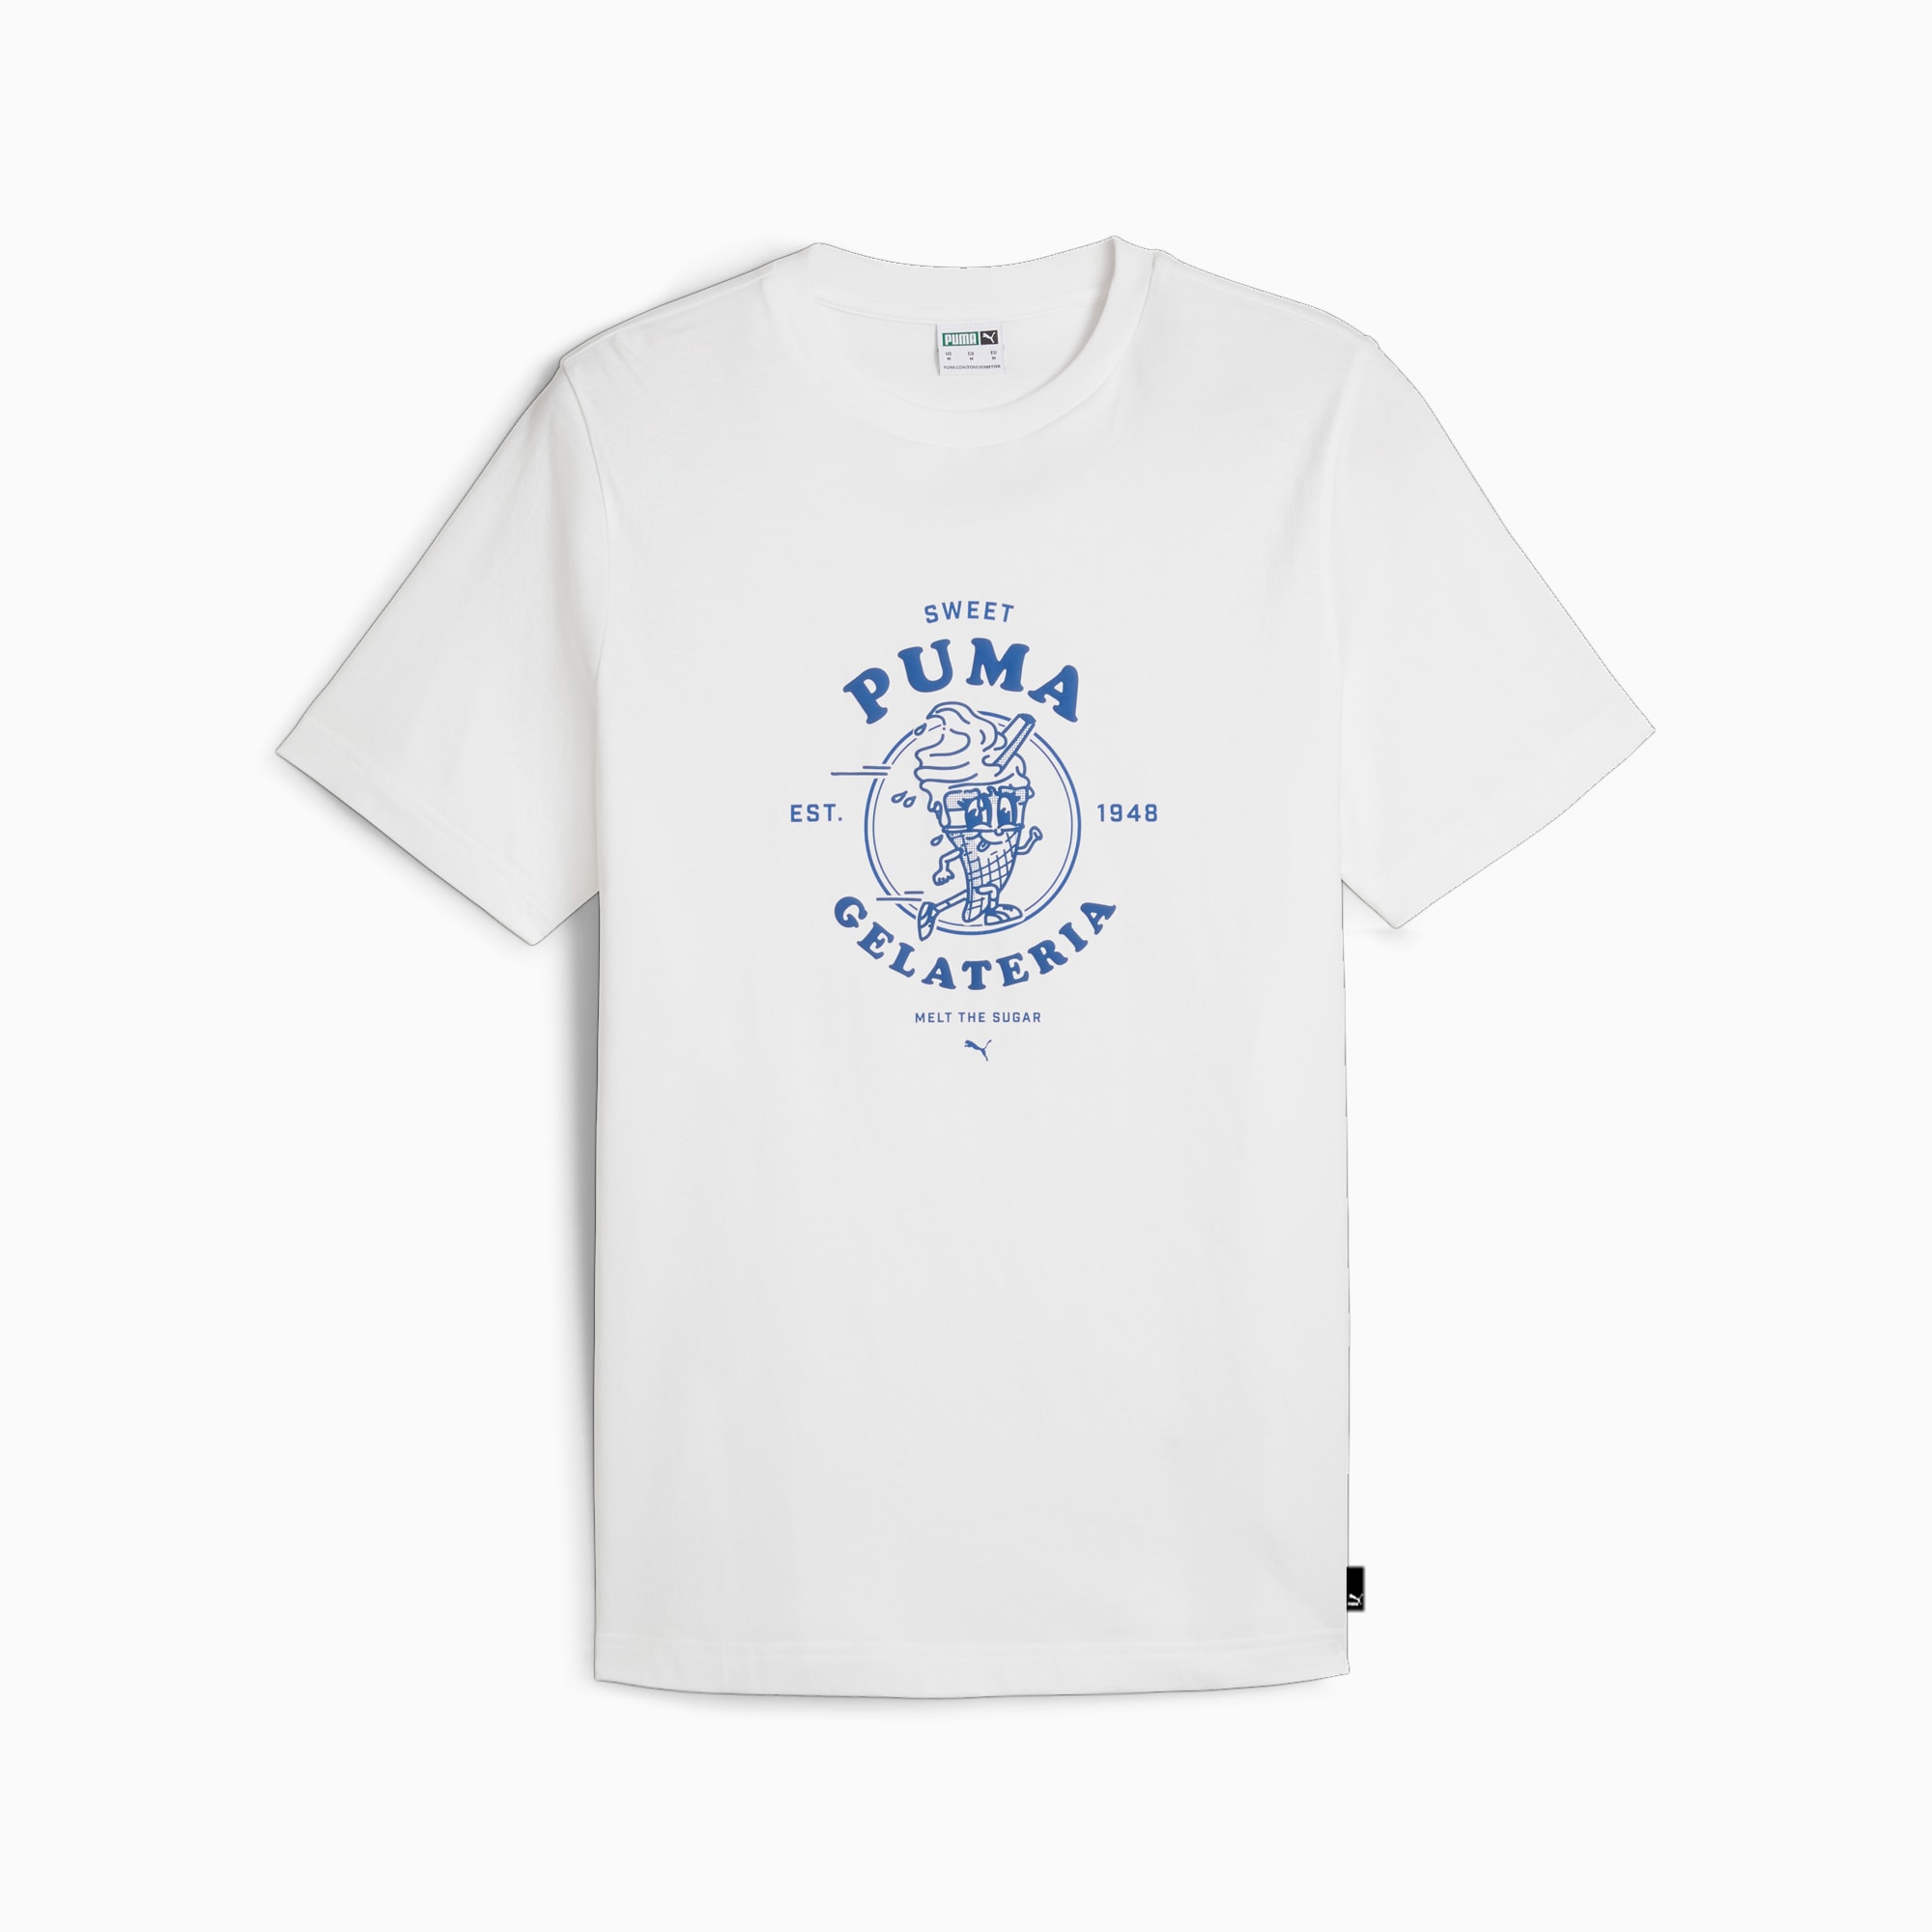 Graphics PUMA Gelateria Men's T-Shirt, White, Size L, Clothing